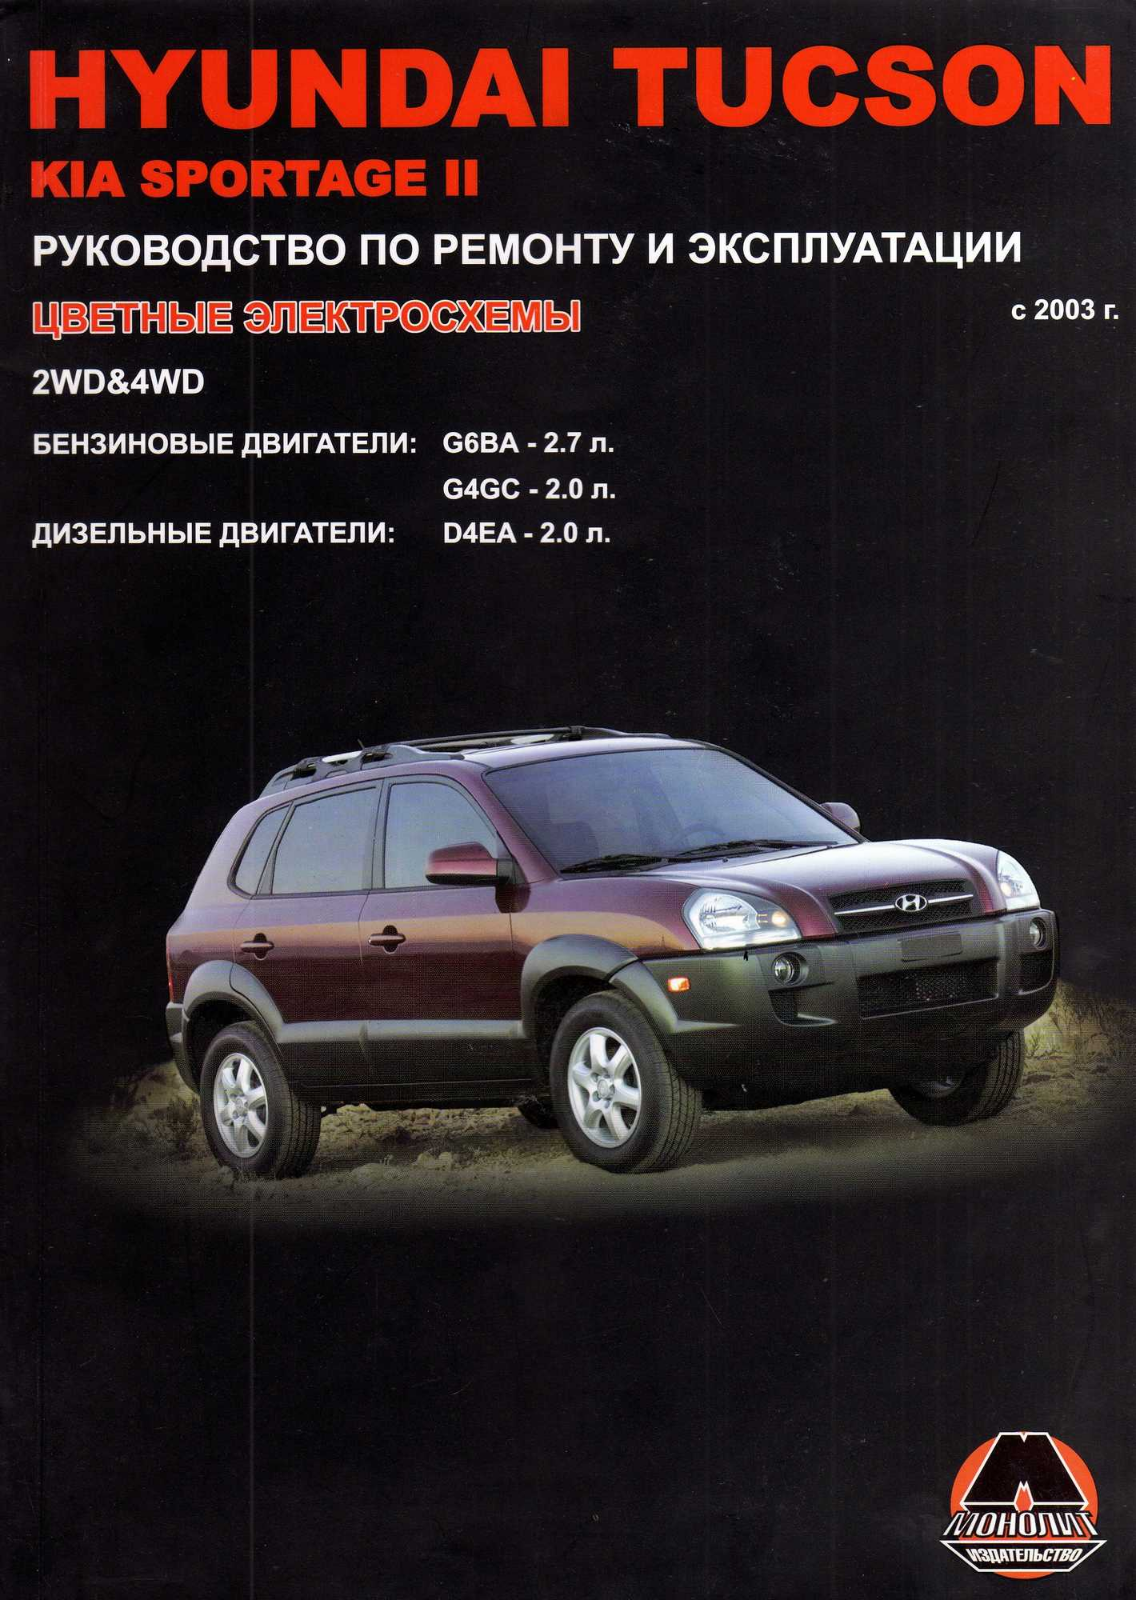 Kia Sportage 2003 User Manual